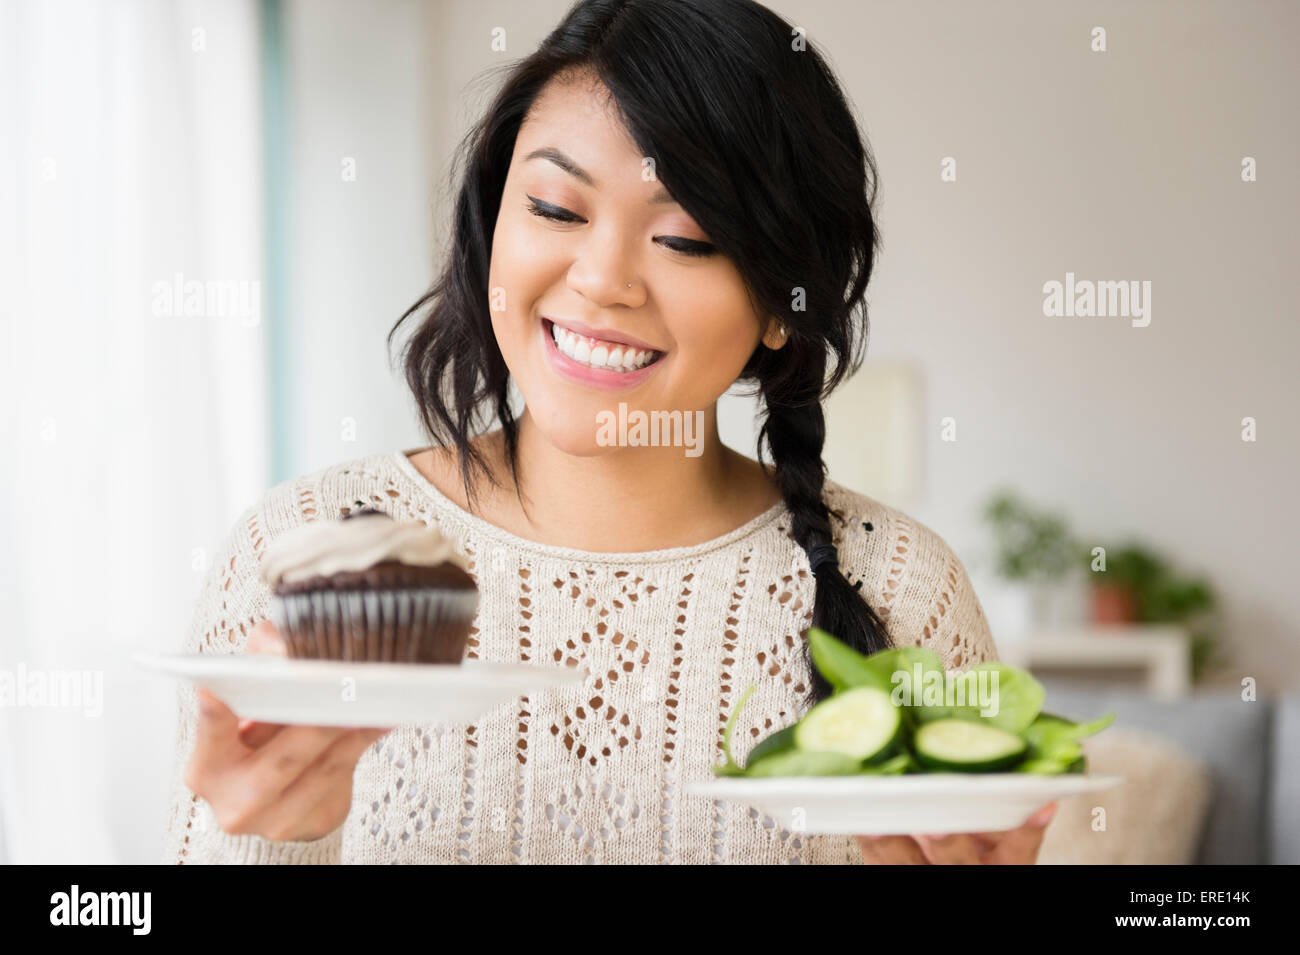 Pacific Islander woman choosing between cupcake and salad Stock Photo